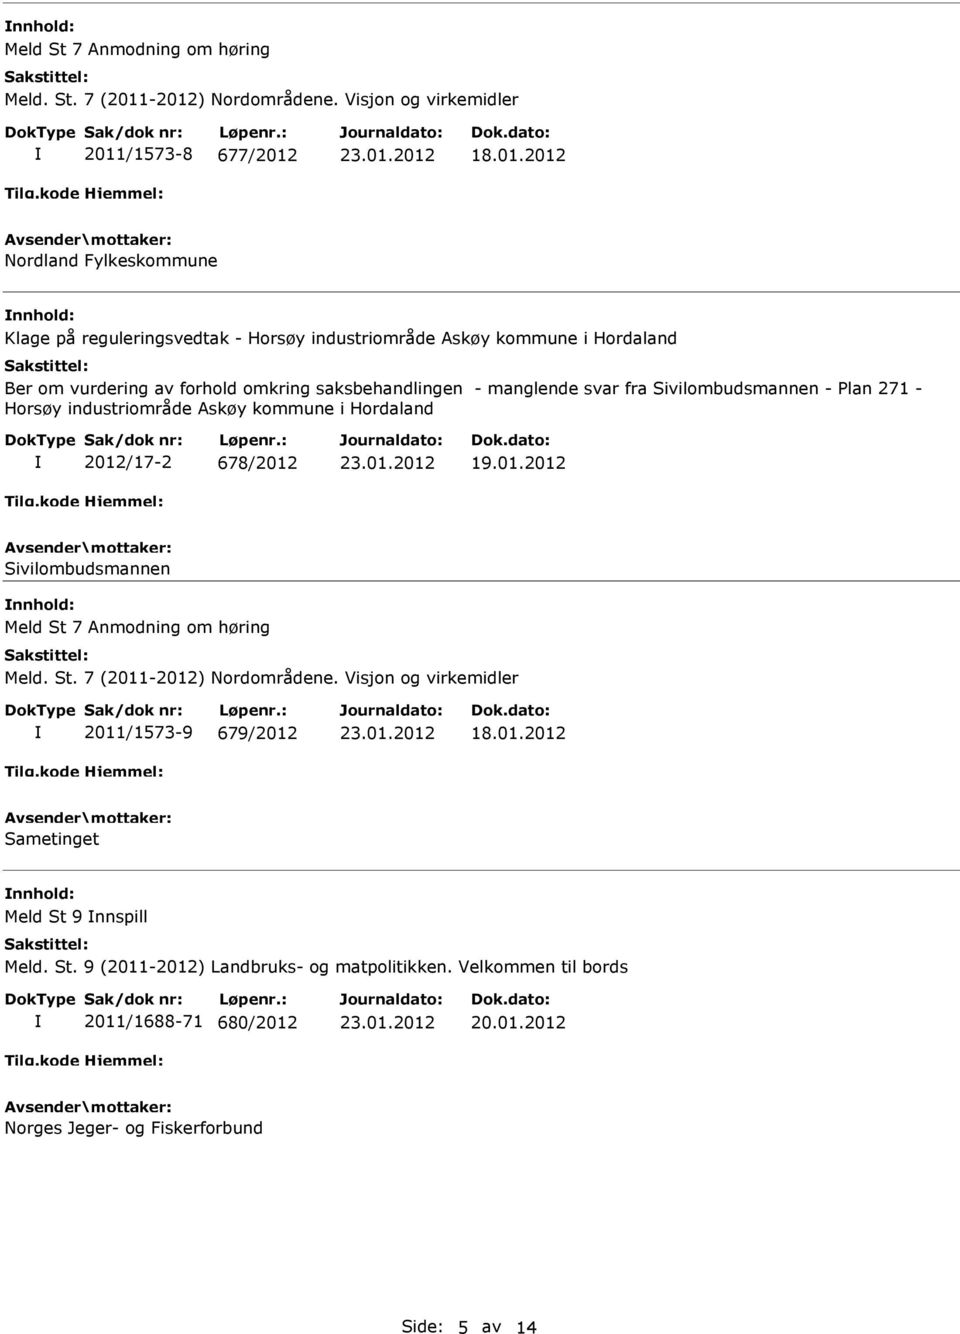 om vurdering av forhold omkring saksbehandlingen - manglende svar fra Sivilombudsmannen - Plan 271 - Horsøy industriområde Askøy kommune i Hordaland 2012